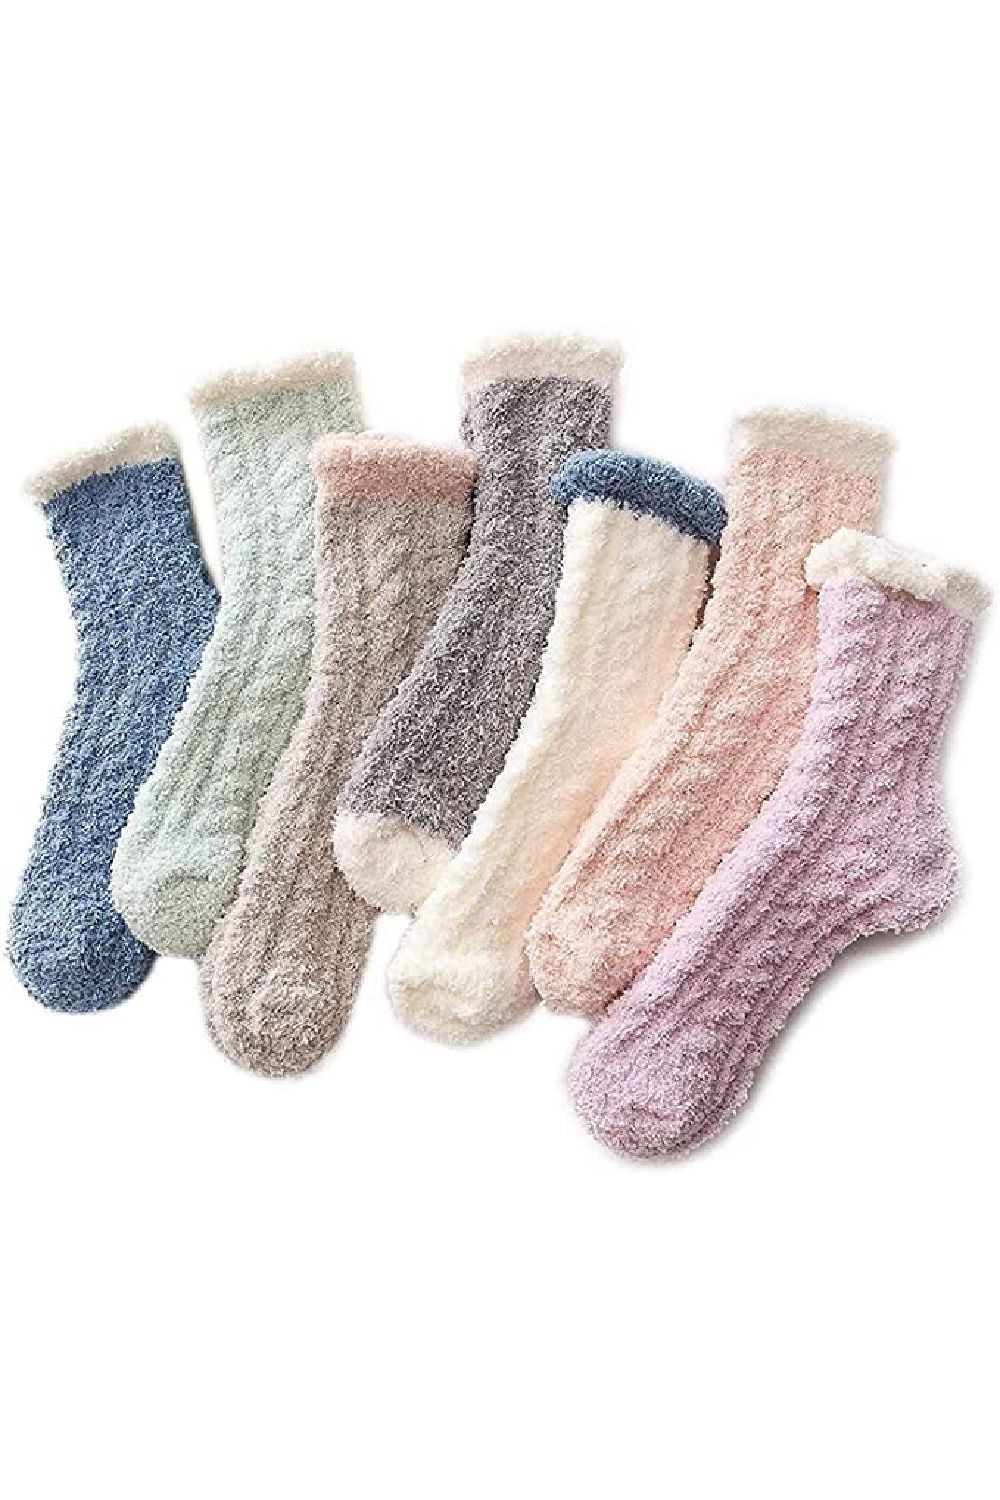 Hemlock Women Girls Fleece Socks Warm Winter Socks Thicken Floor Socks Middle Stocking Socks 